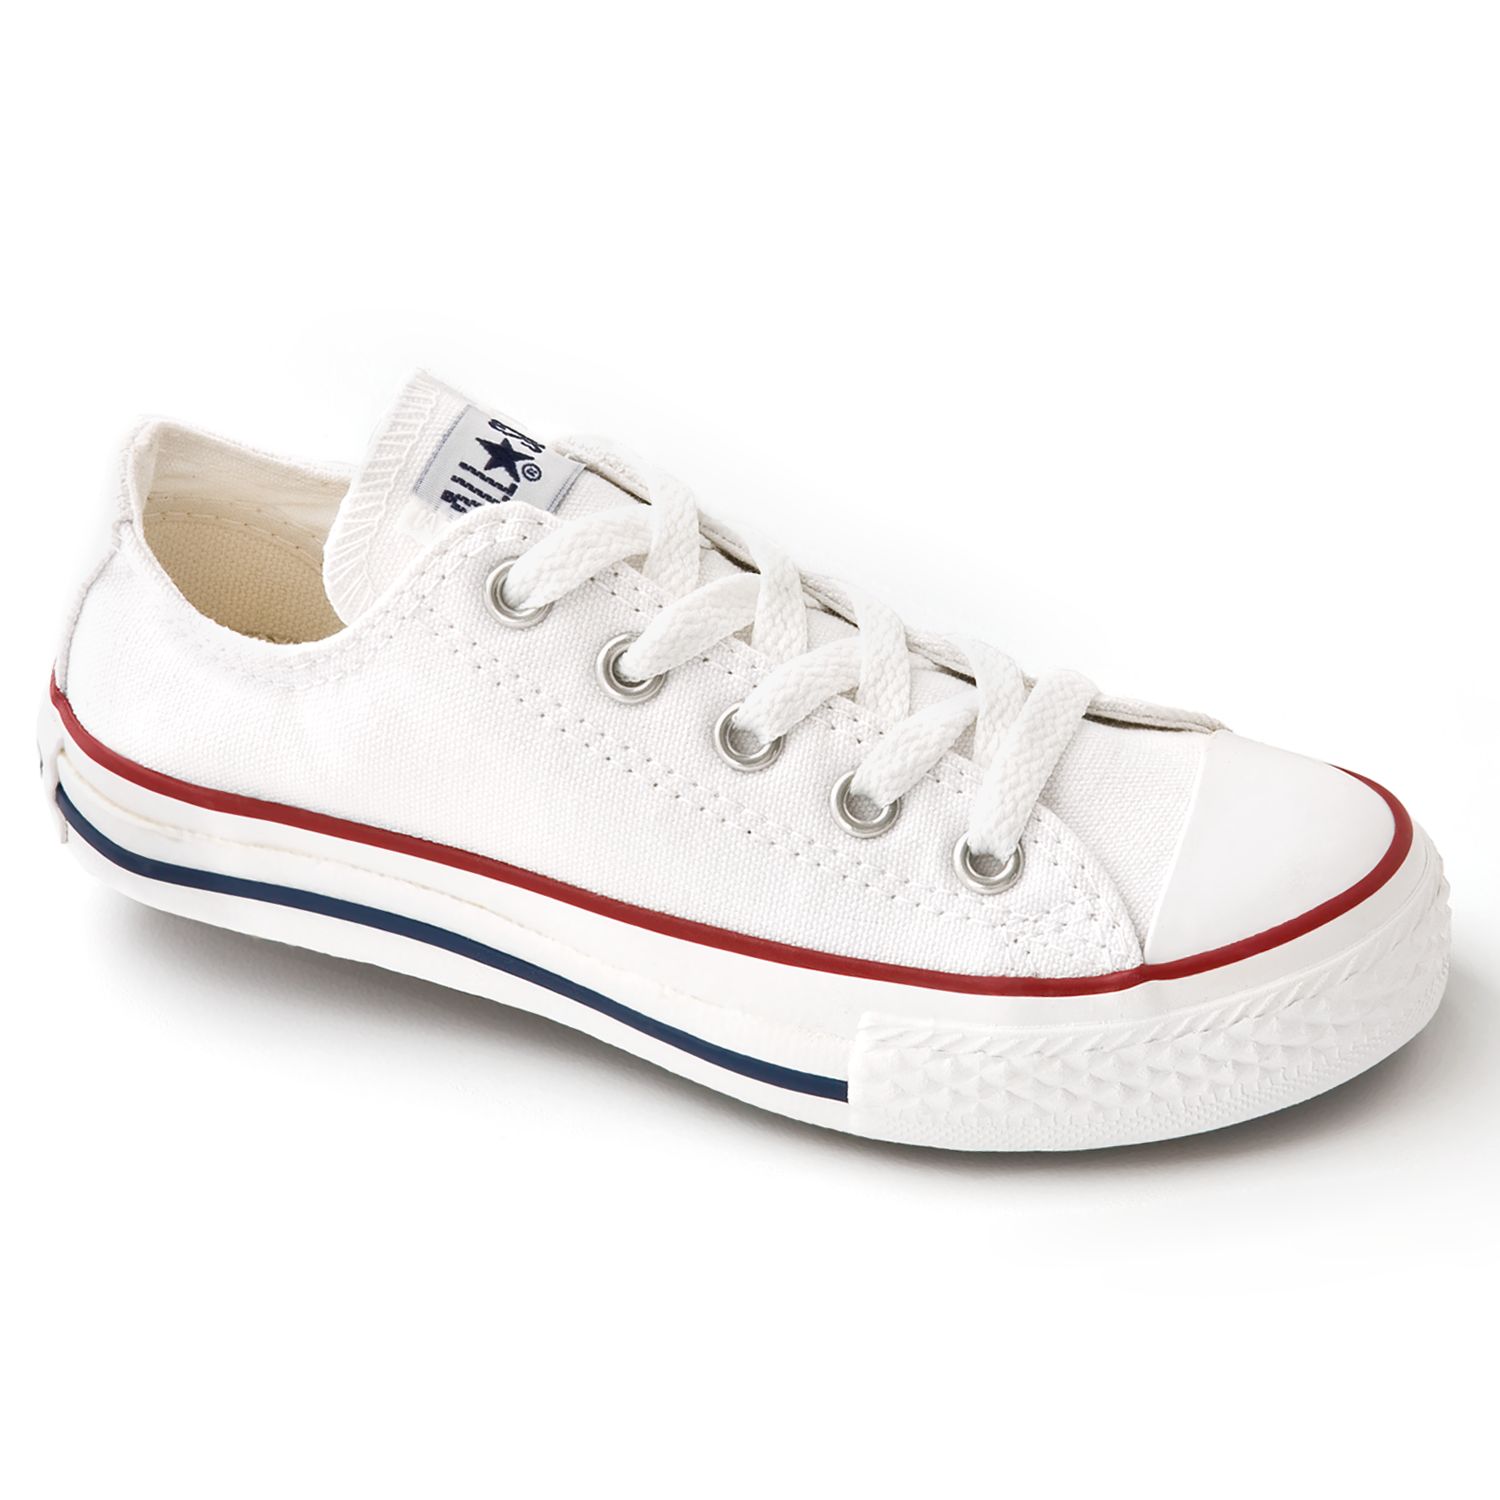 white converse size 4